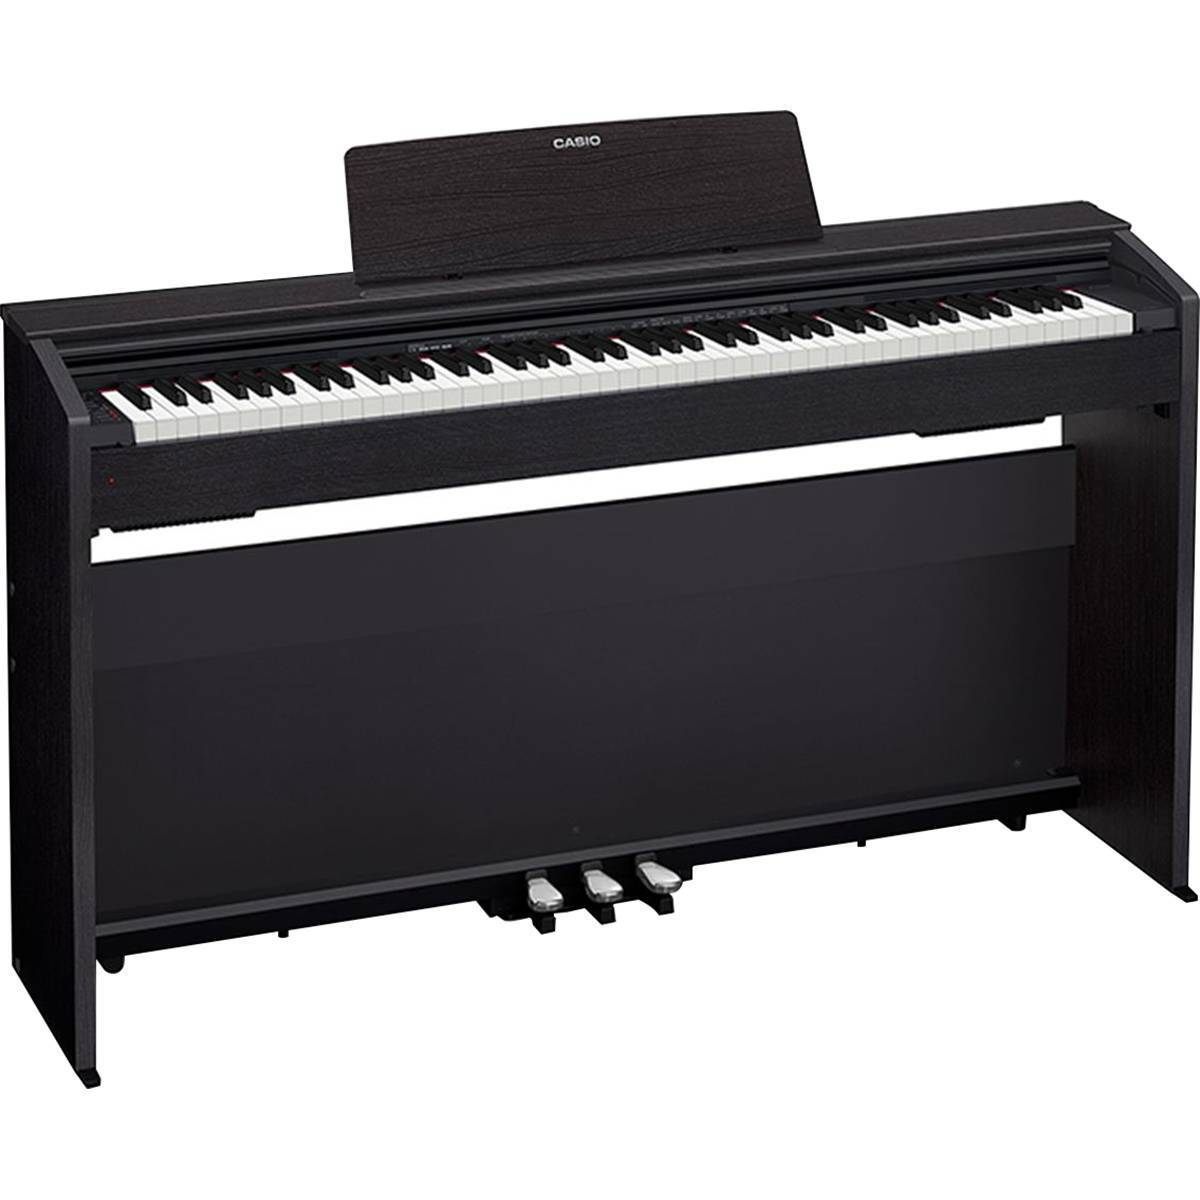 PIANO CASIO DIGITAL PX-770 BK